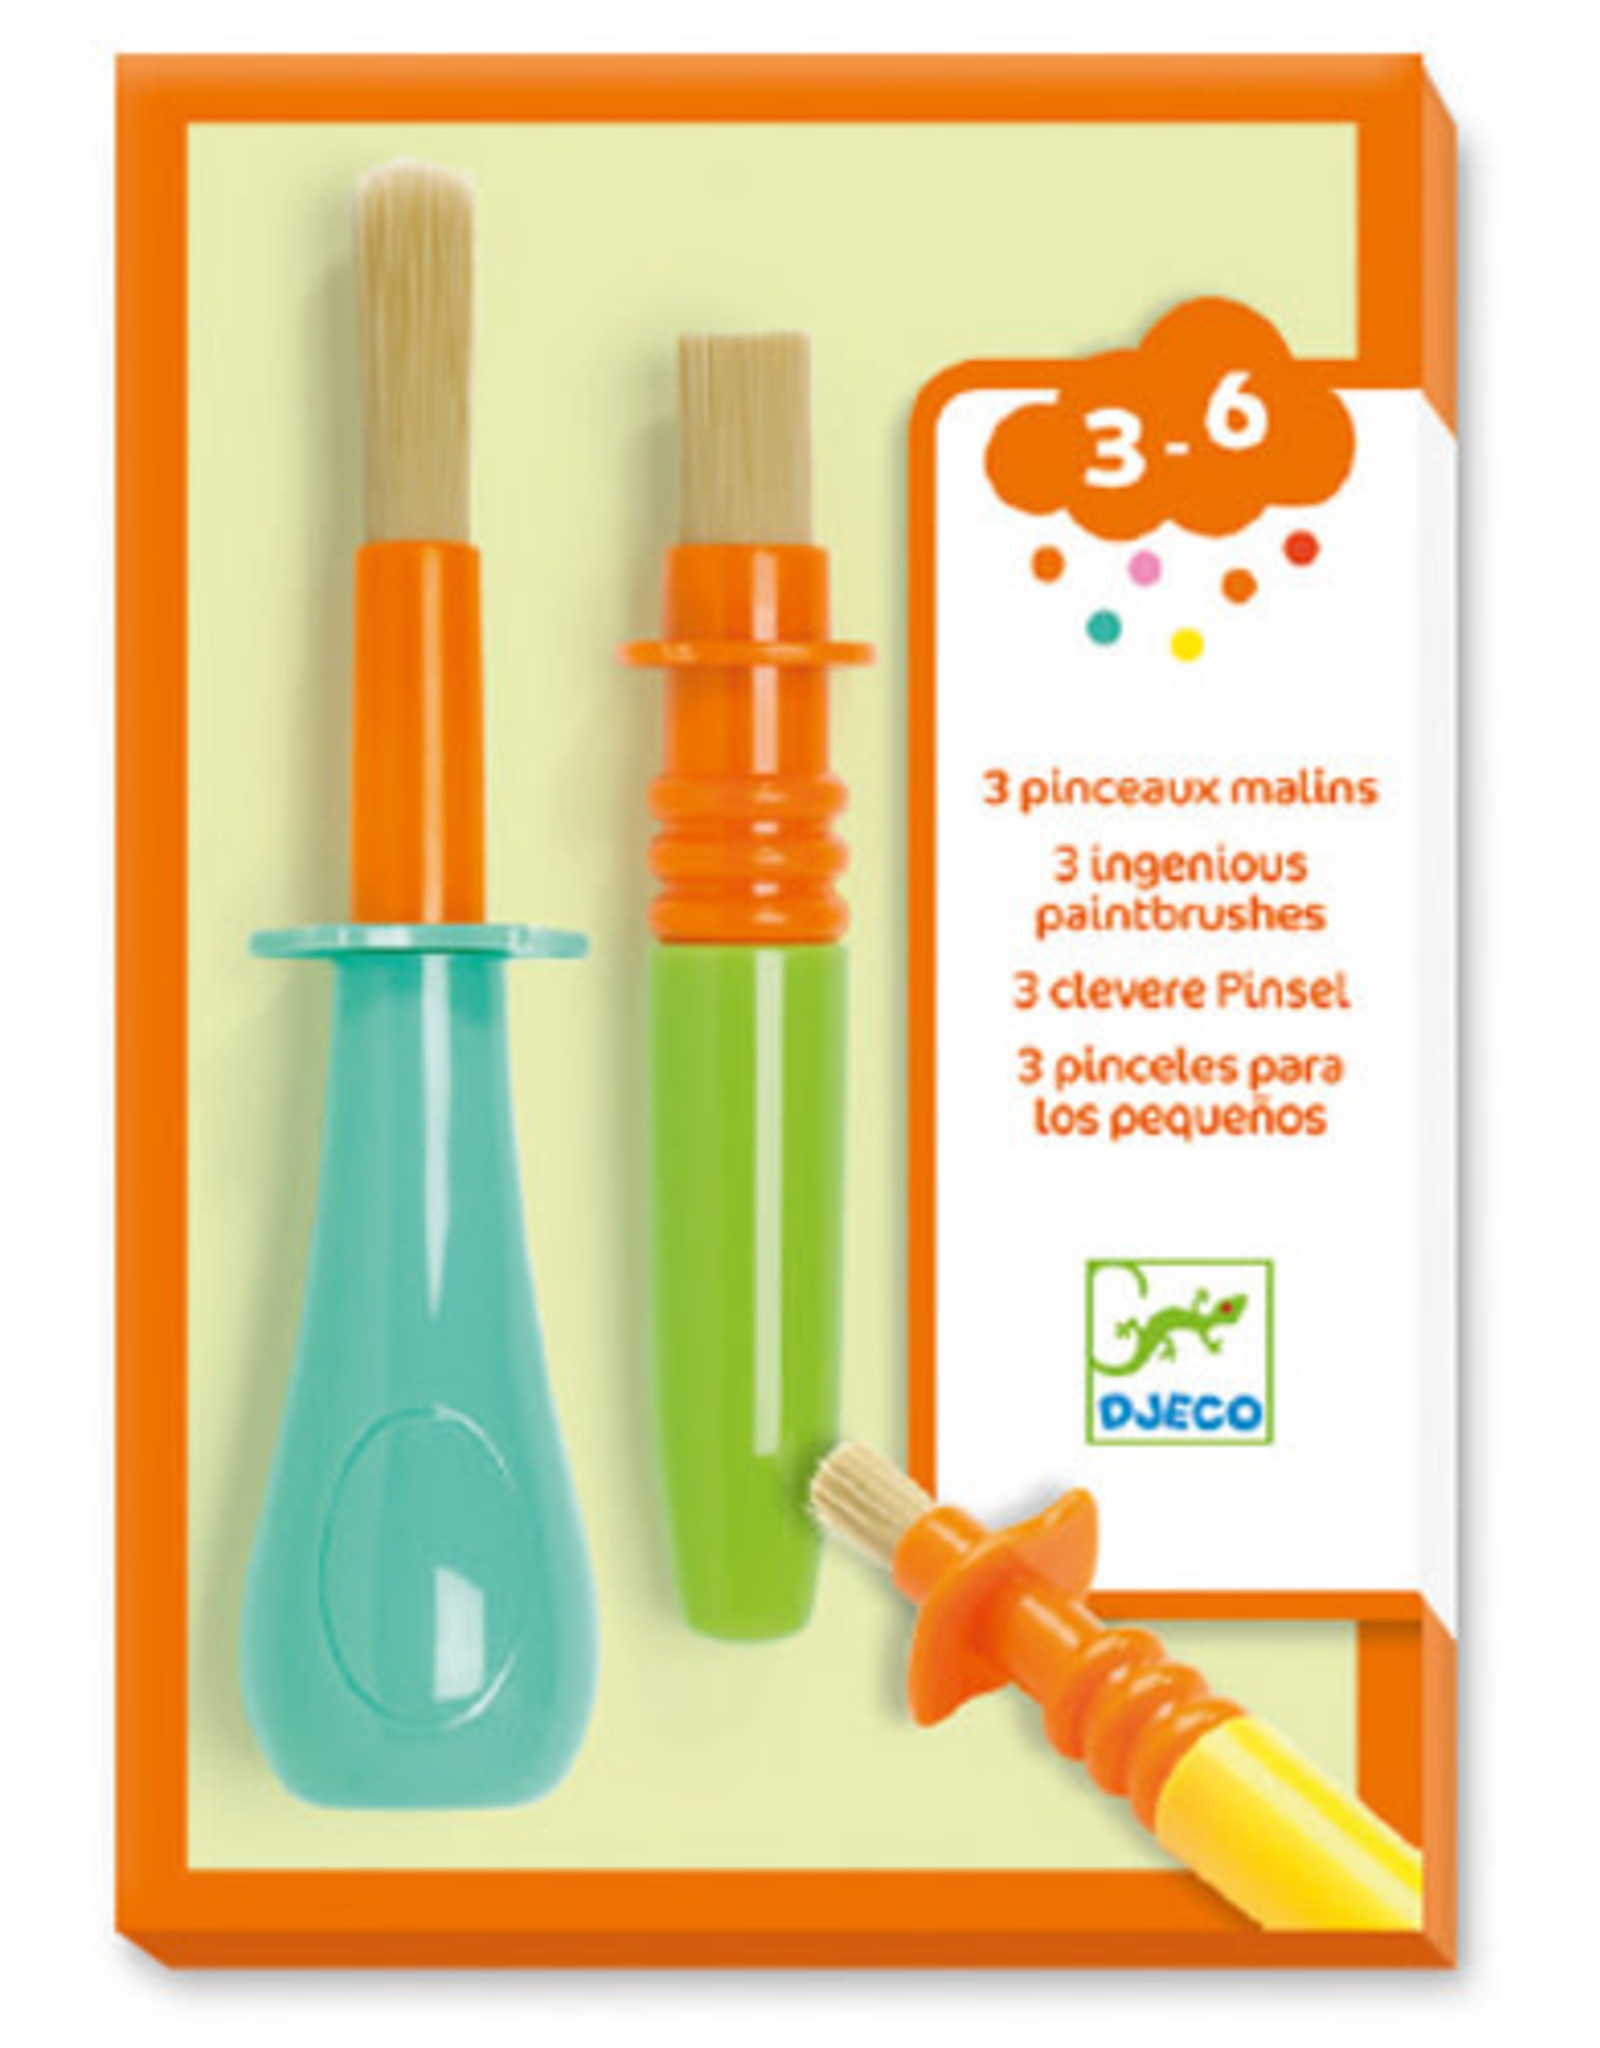 Djeco 3 Ingenious Paintbrushes